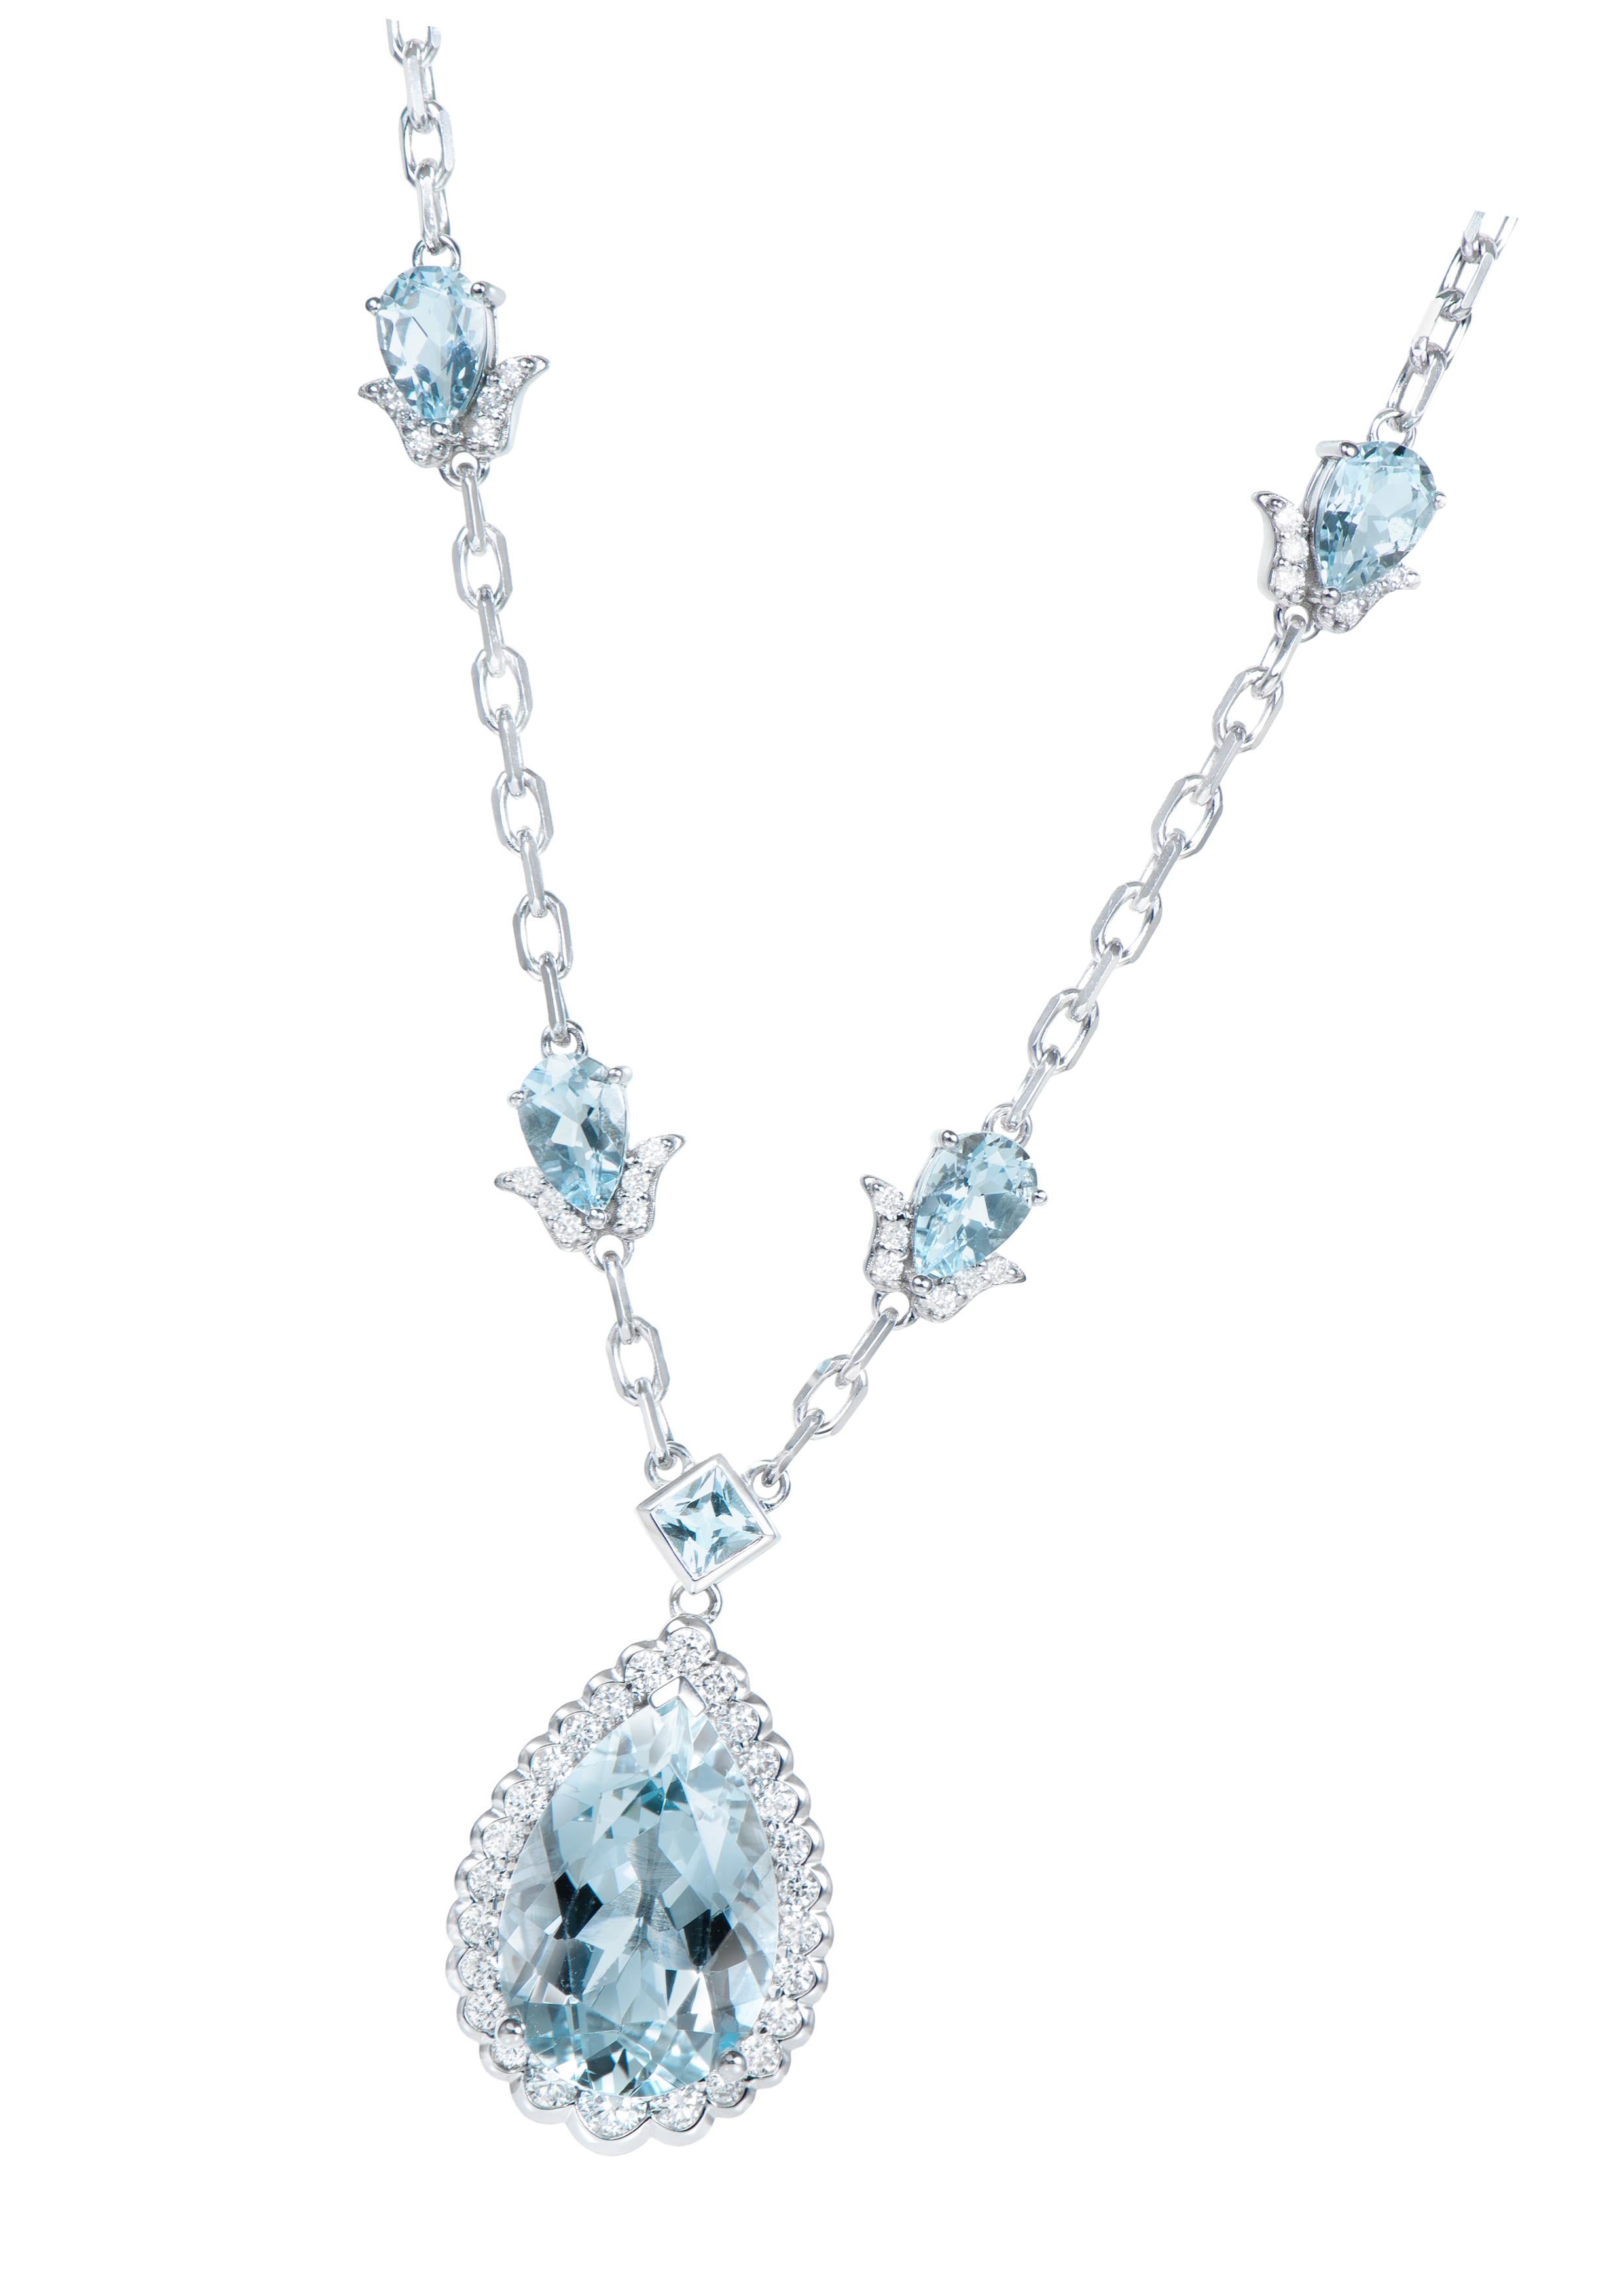 Contemporary Aquamarine Pendant with White Diamond in 18 Karat White Gold. For Sale